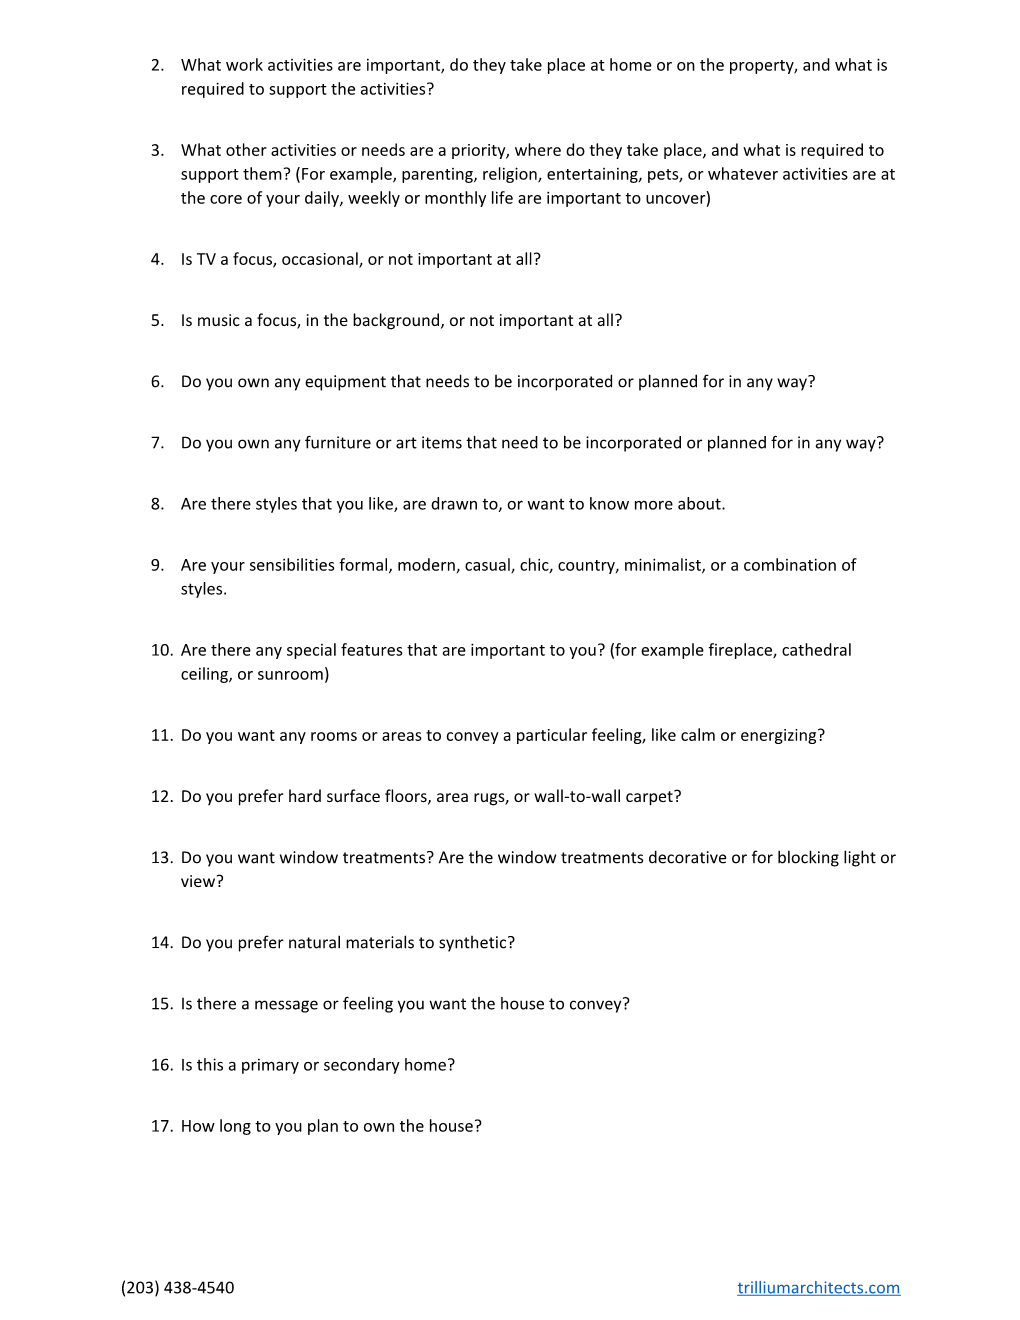 The Pre-Design Questionnaire